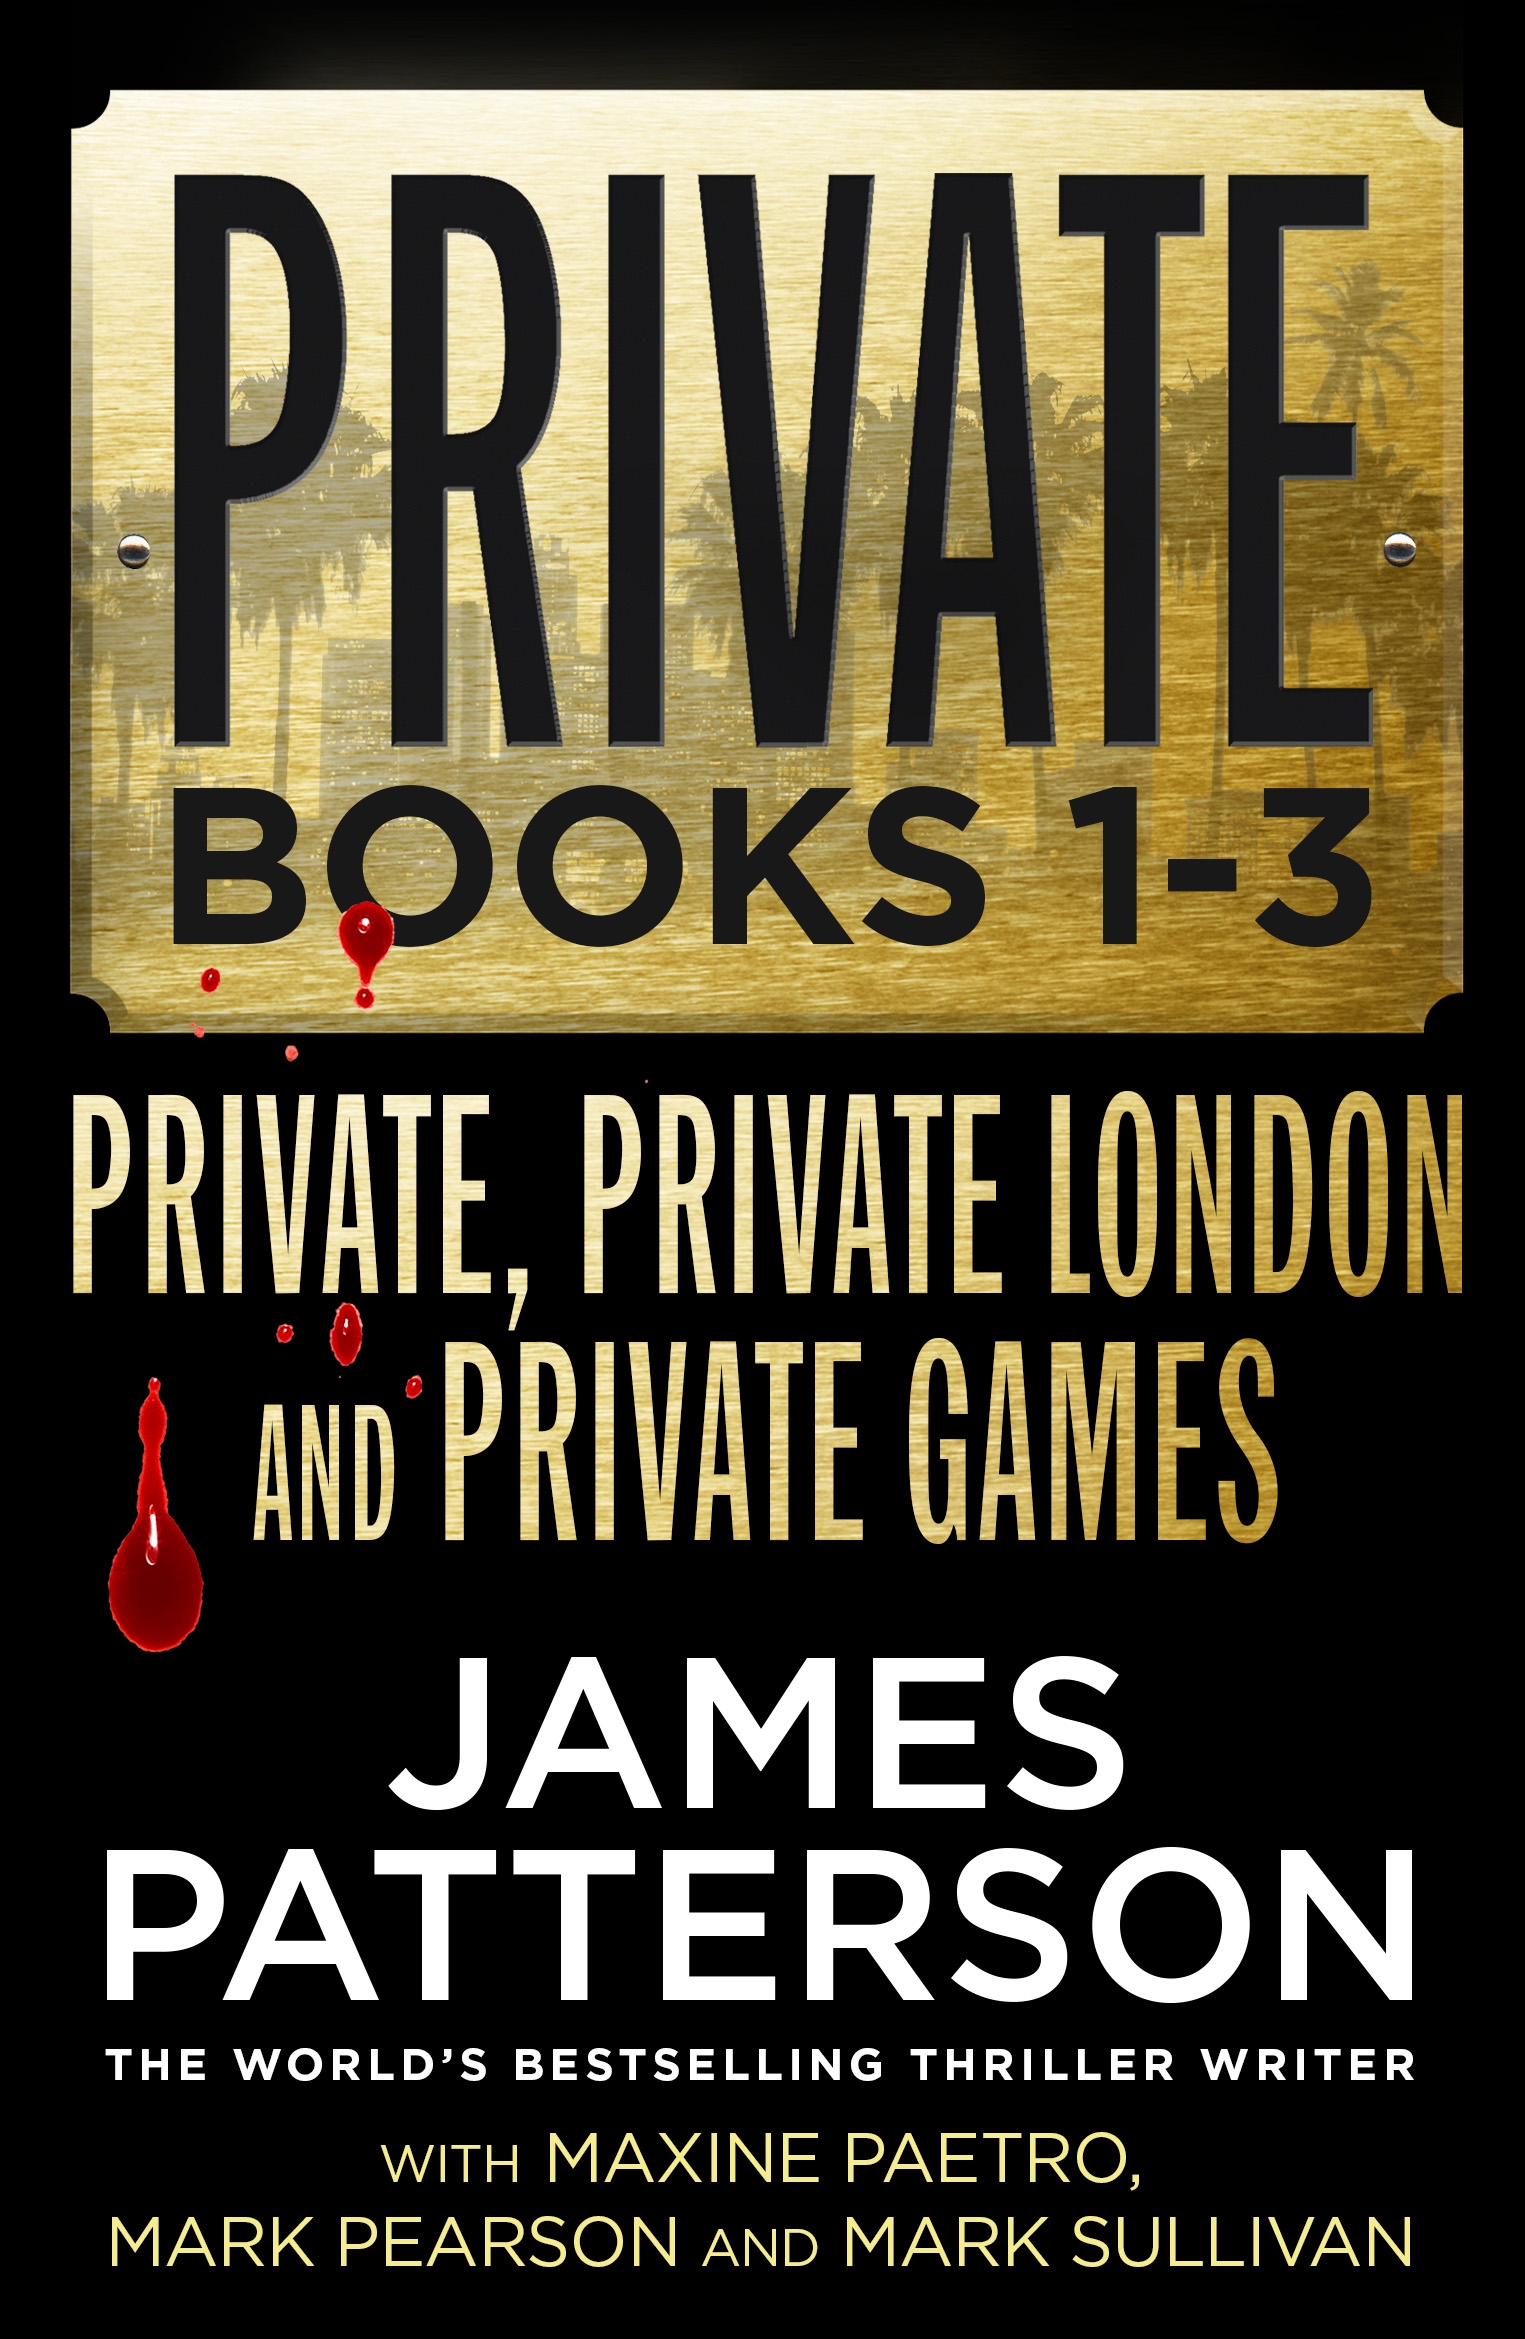 james patterson private books order